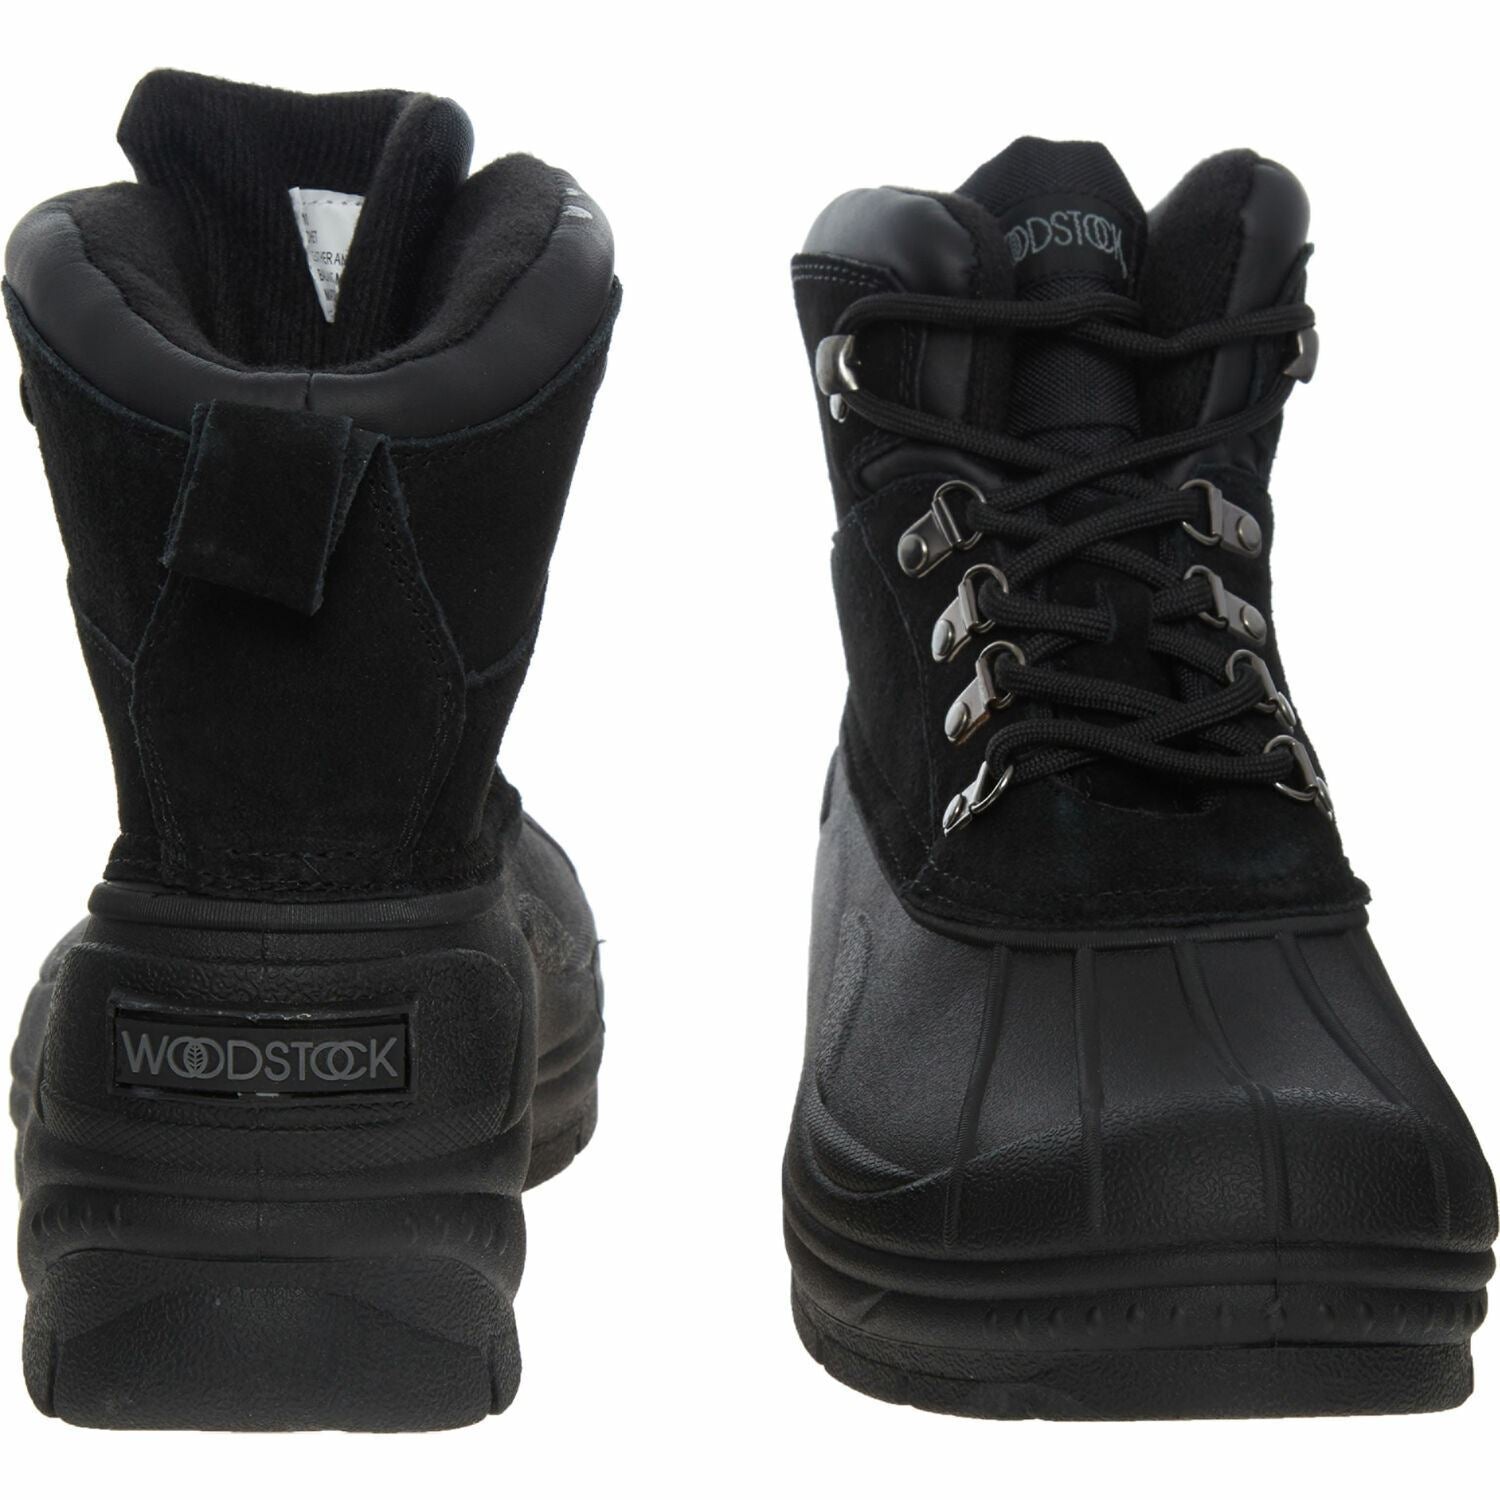 WOODSTOCK Men's CHET Black Thermolite Boots, size UK 12